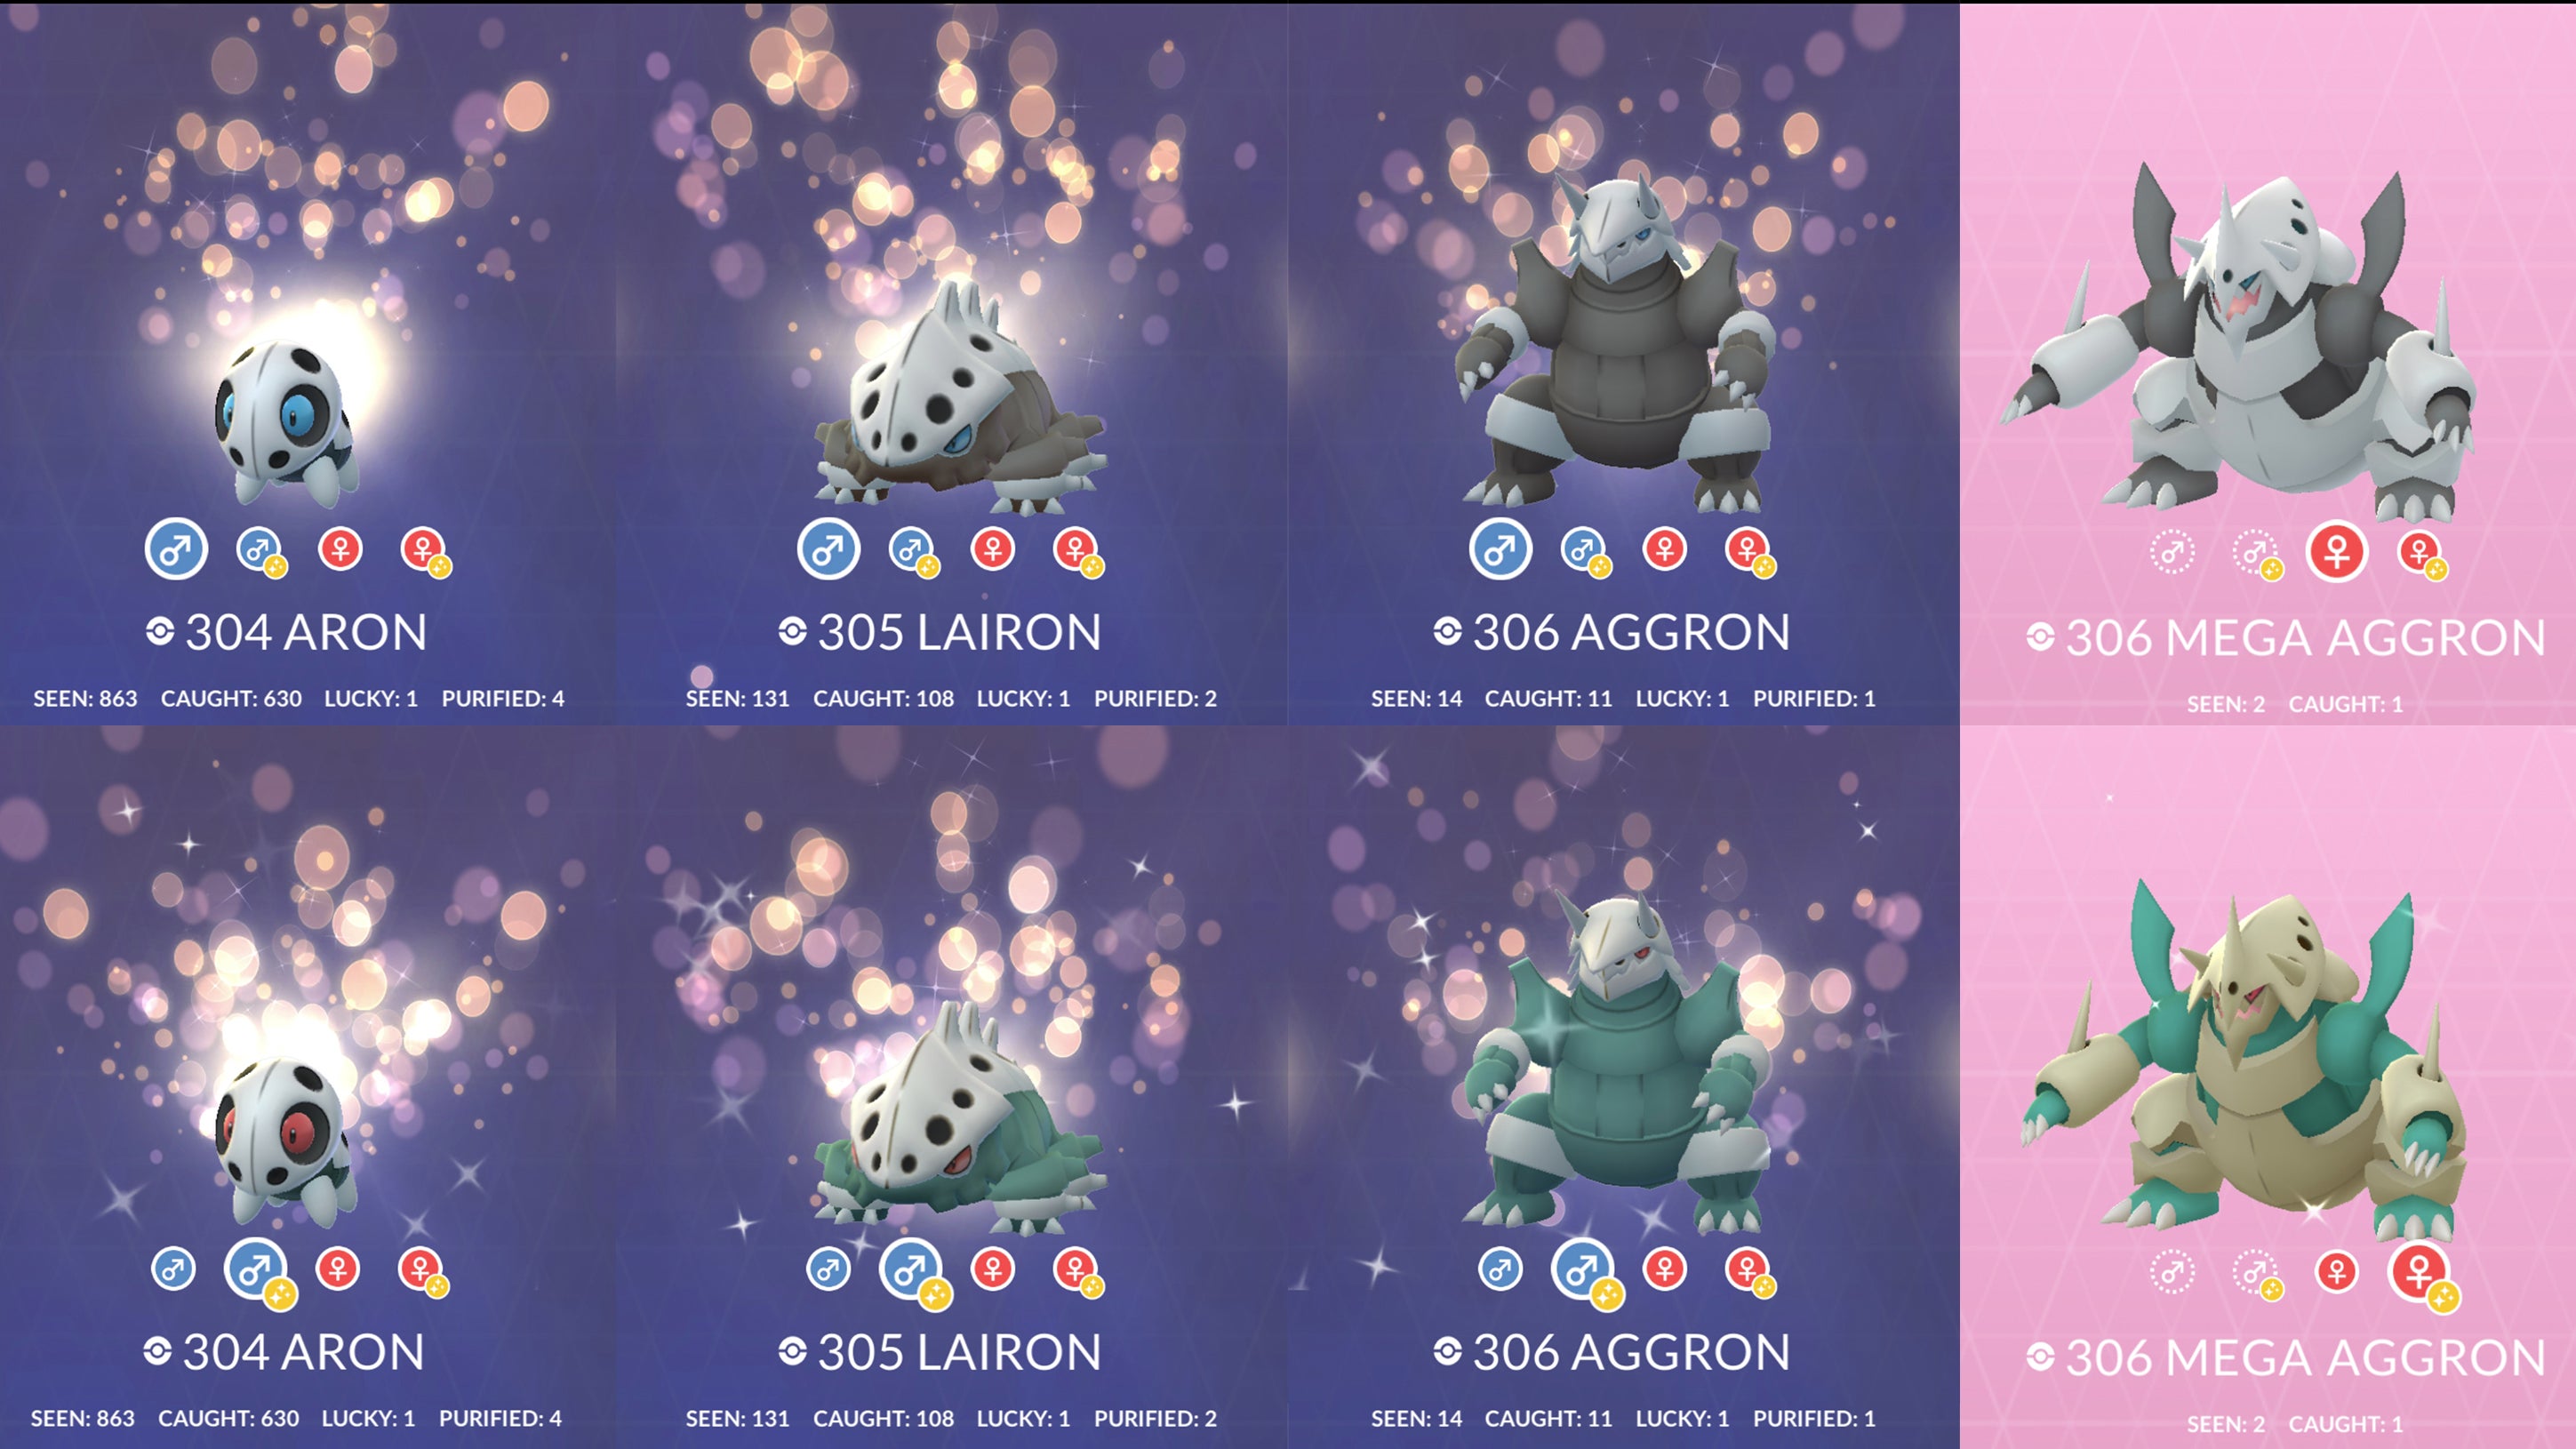 Aron family with shinies in Pokémon Go